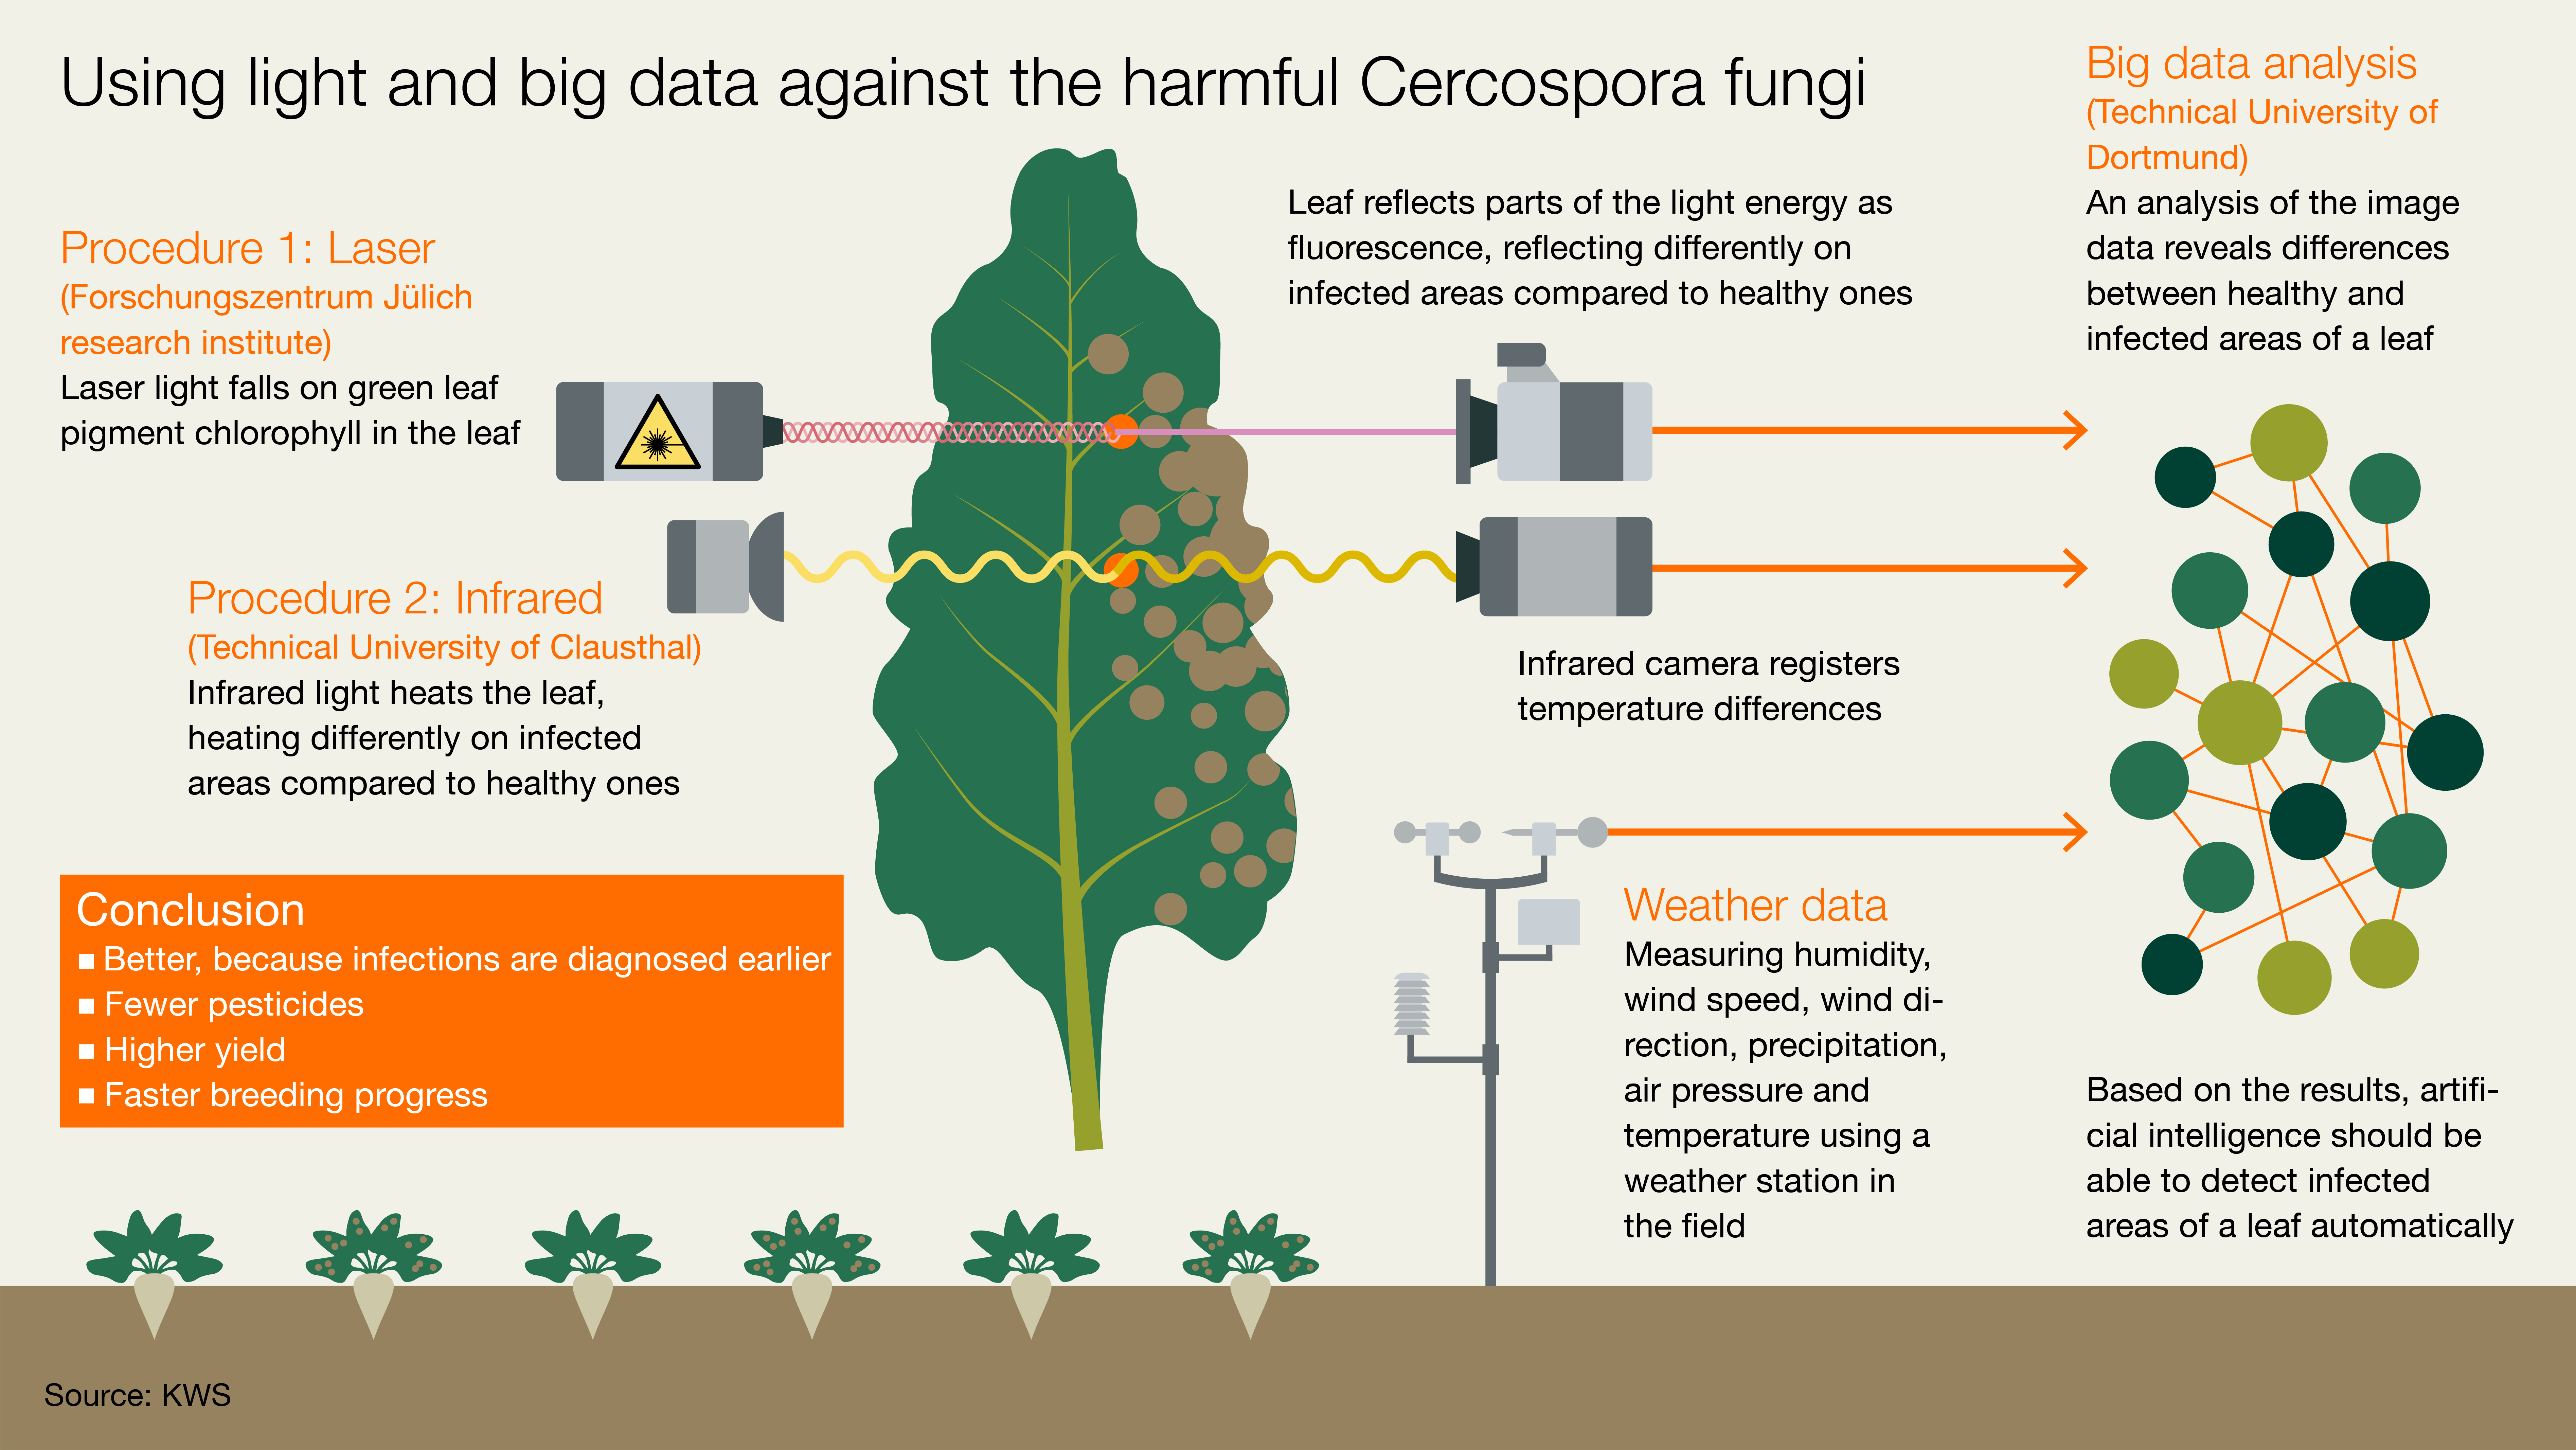 KWS infographics: Using light and big data against the harmful Cercospora fungi